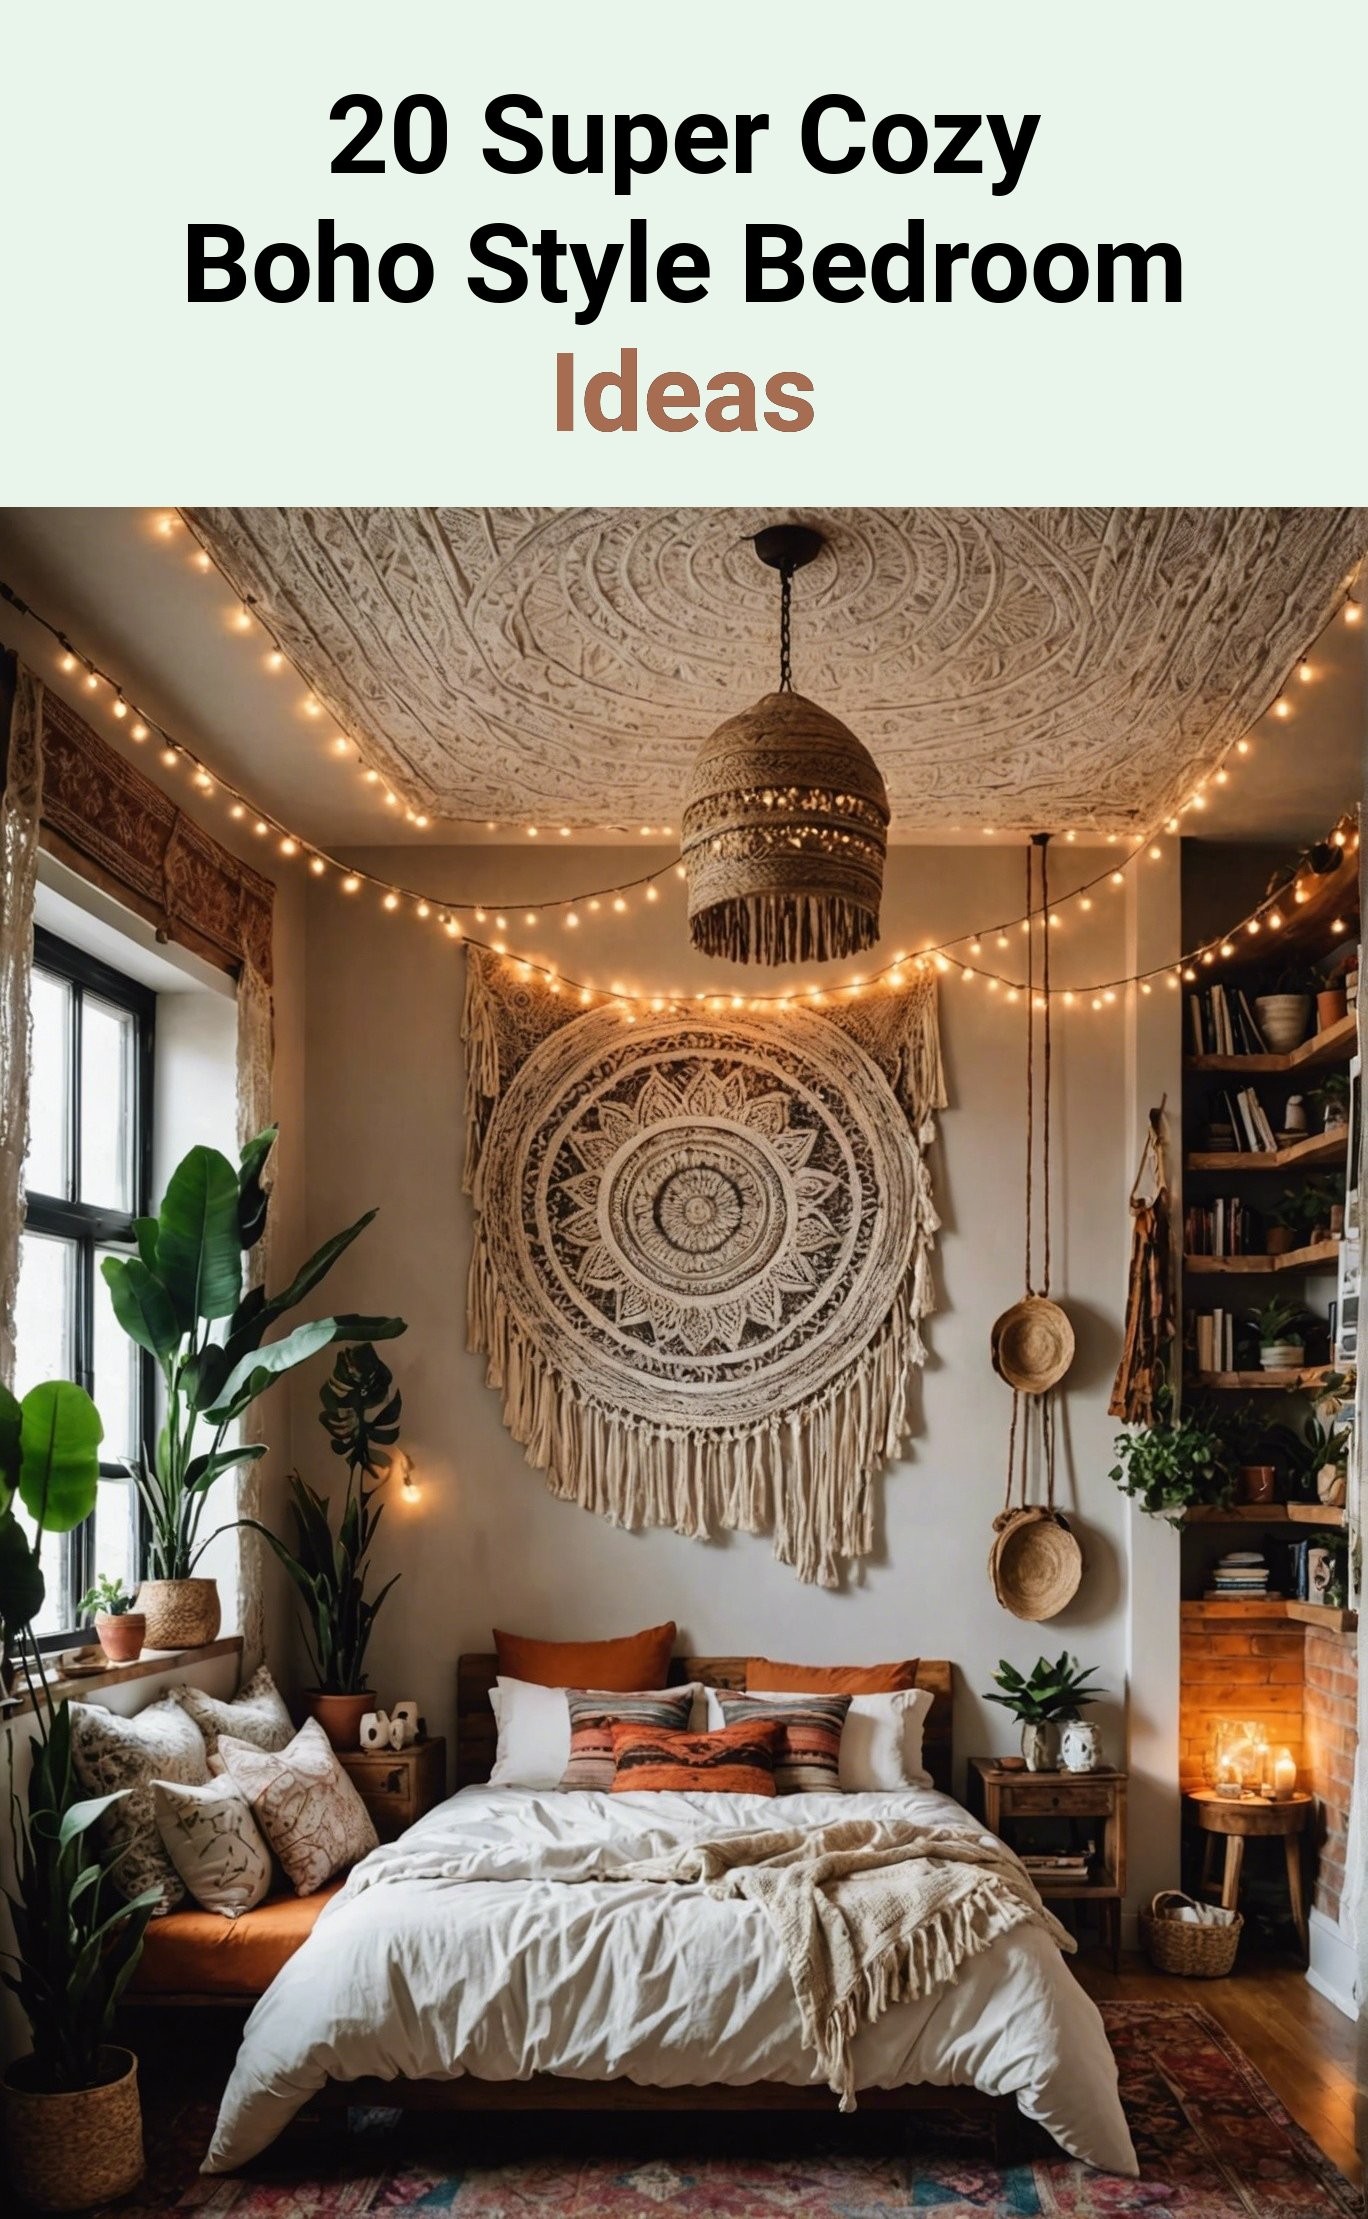 20 Super Cozy Boho Style Bedroom Ideas